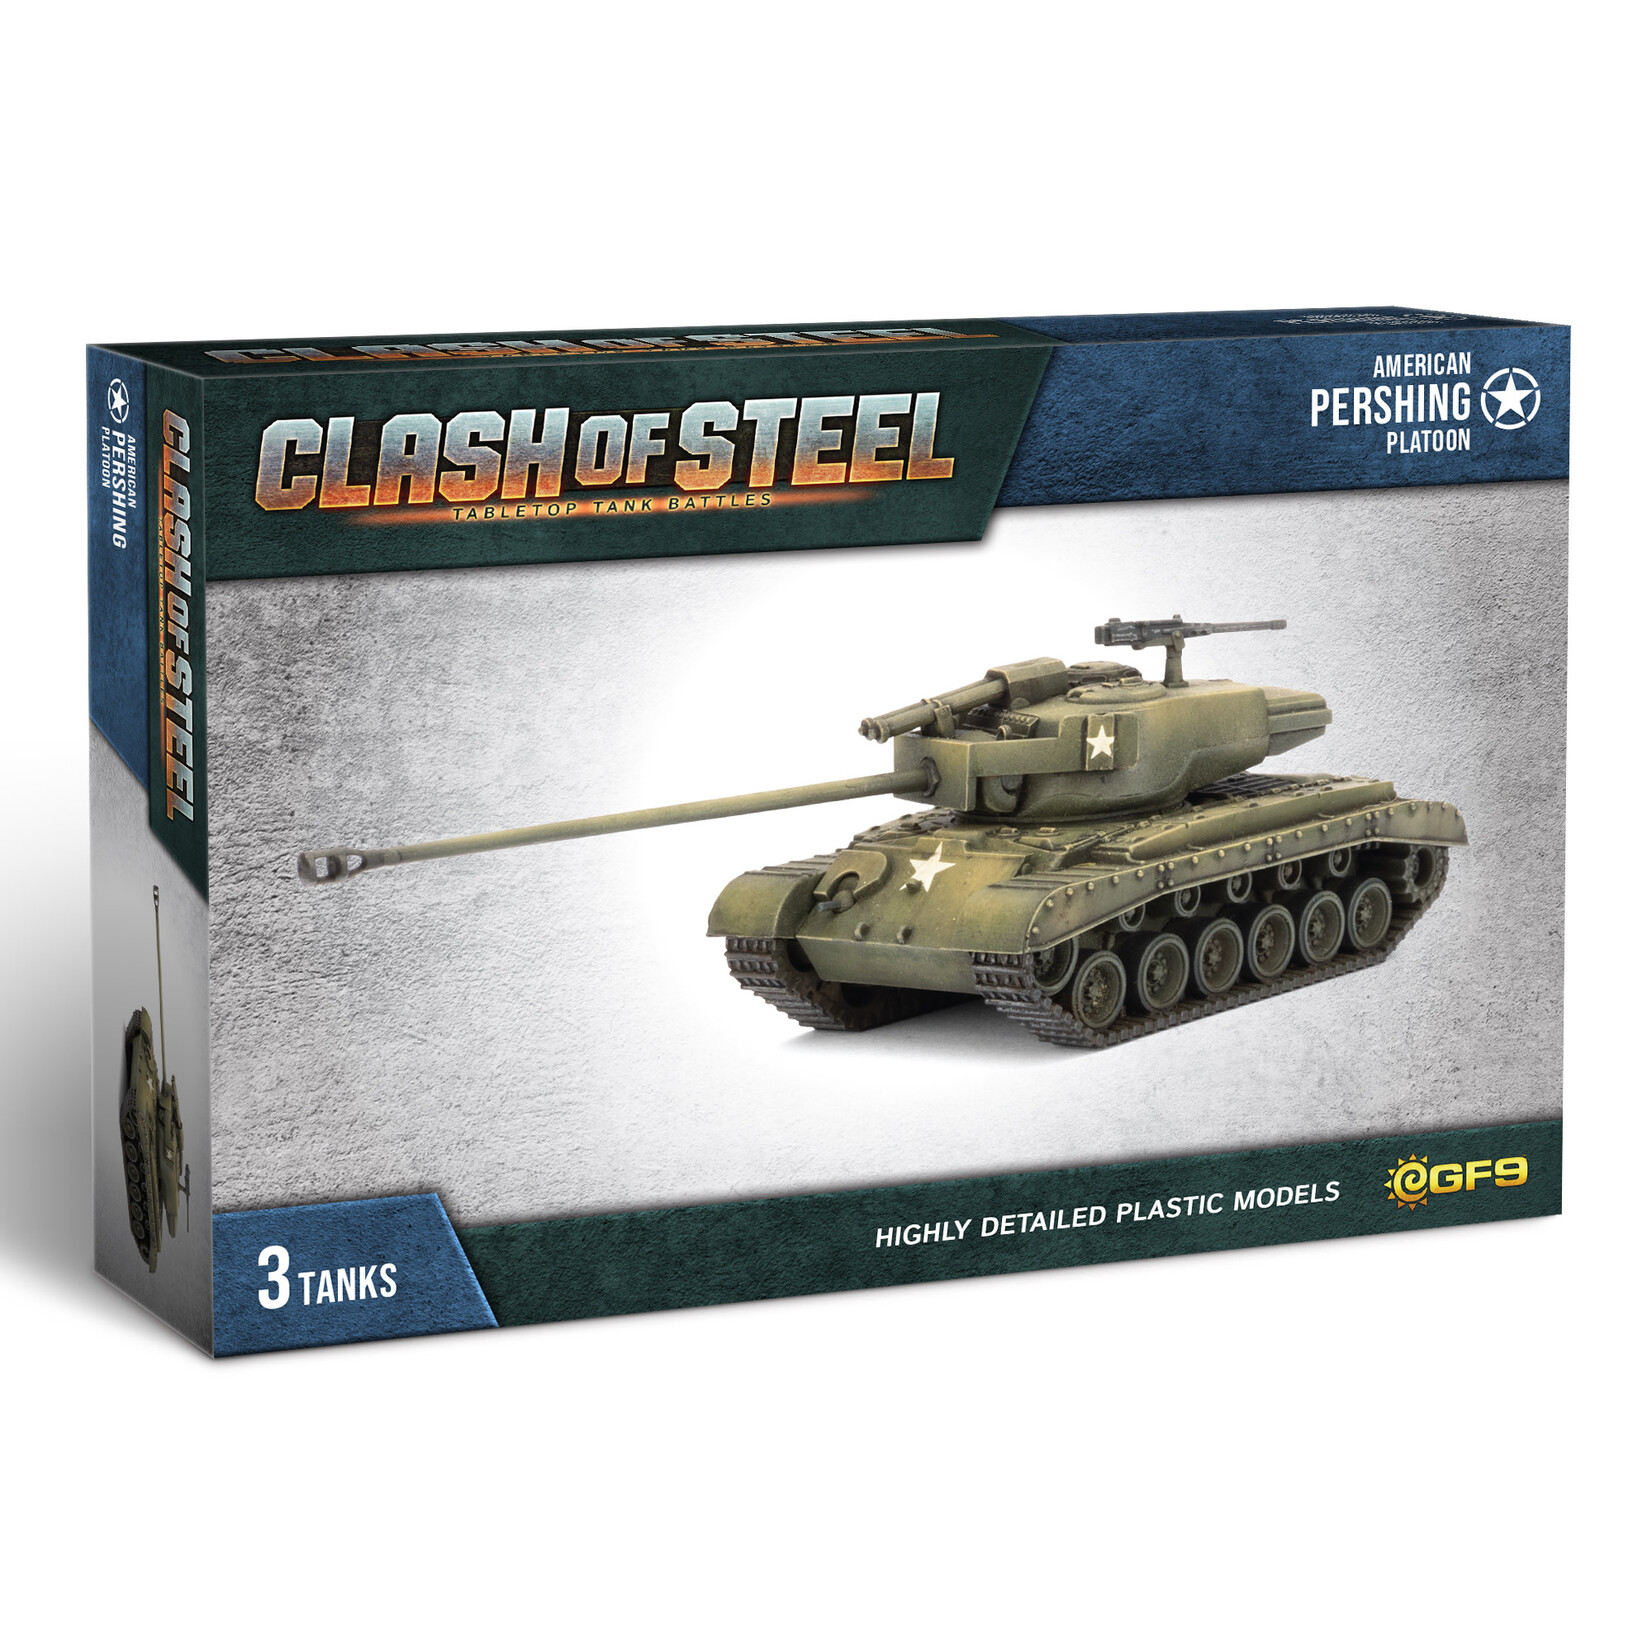 Battlefront Miniatures Clash of Steel Pershing Platoon